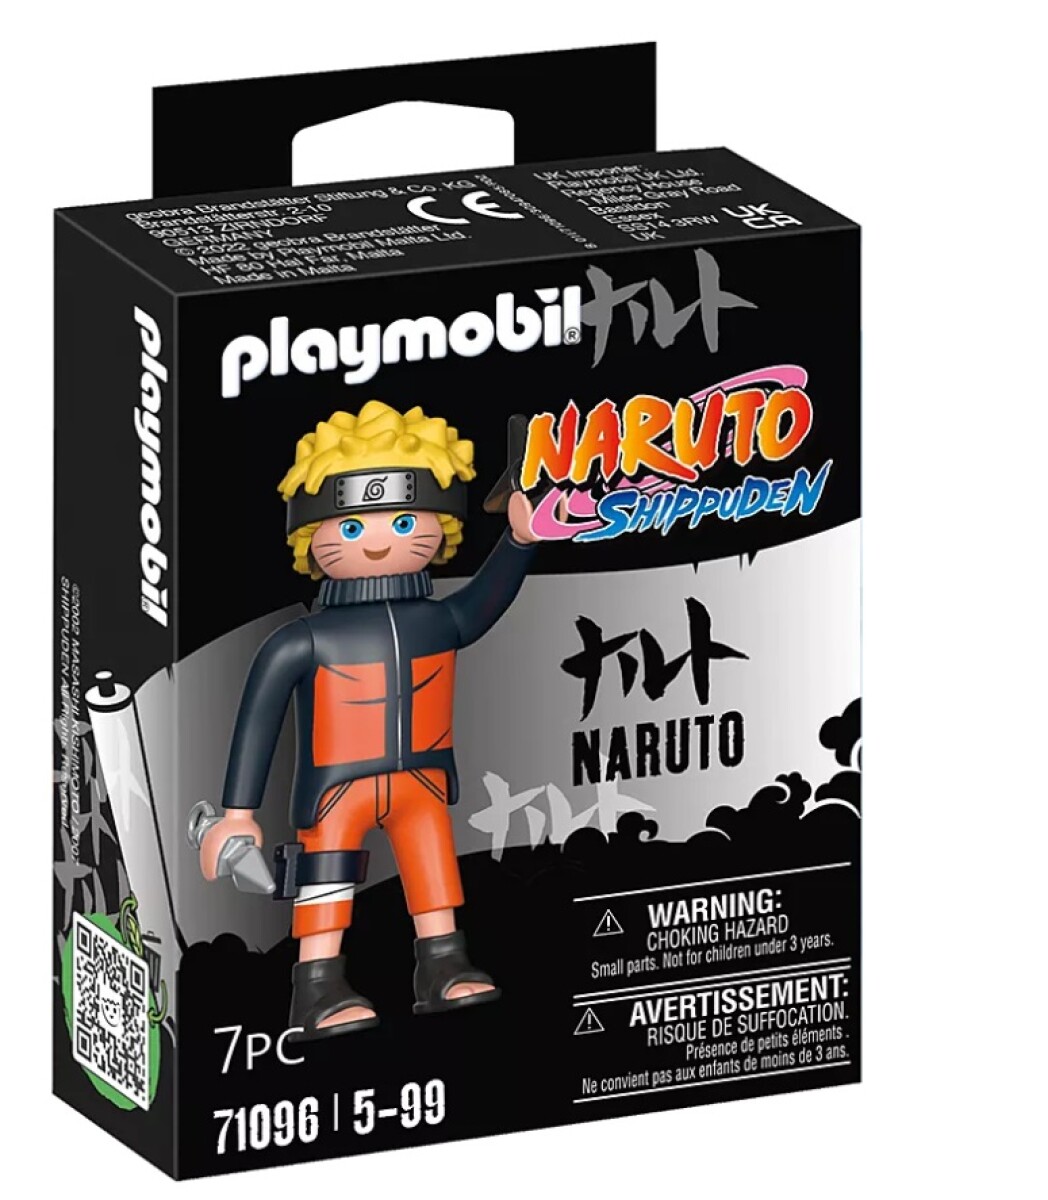 Set Playmobil Naruto Shippuden 7 Piezas - 001 